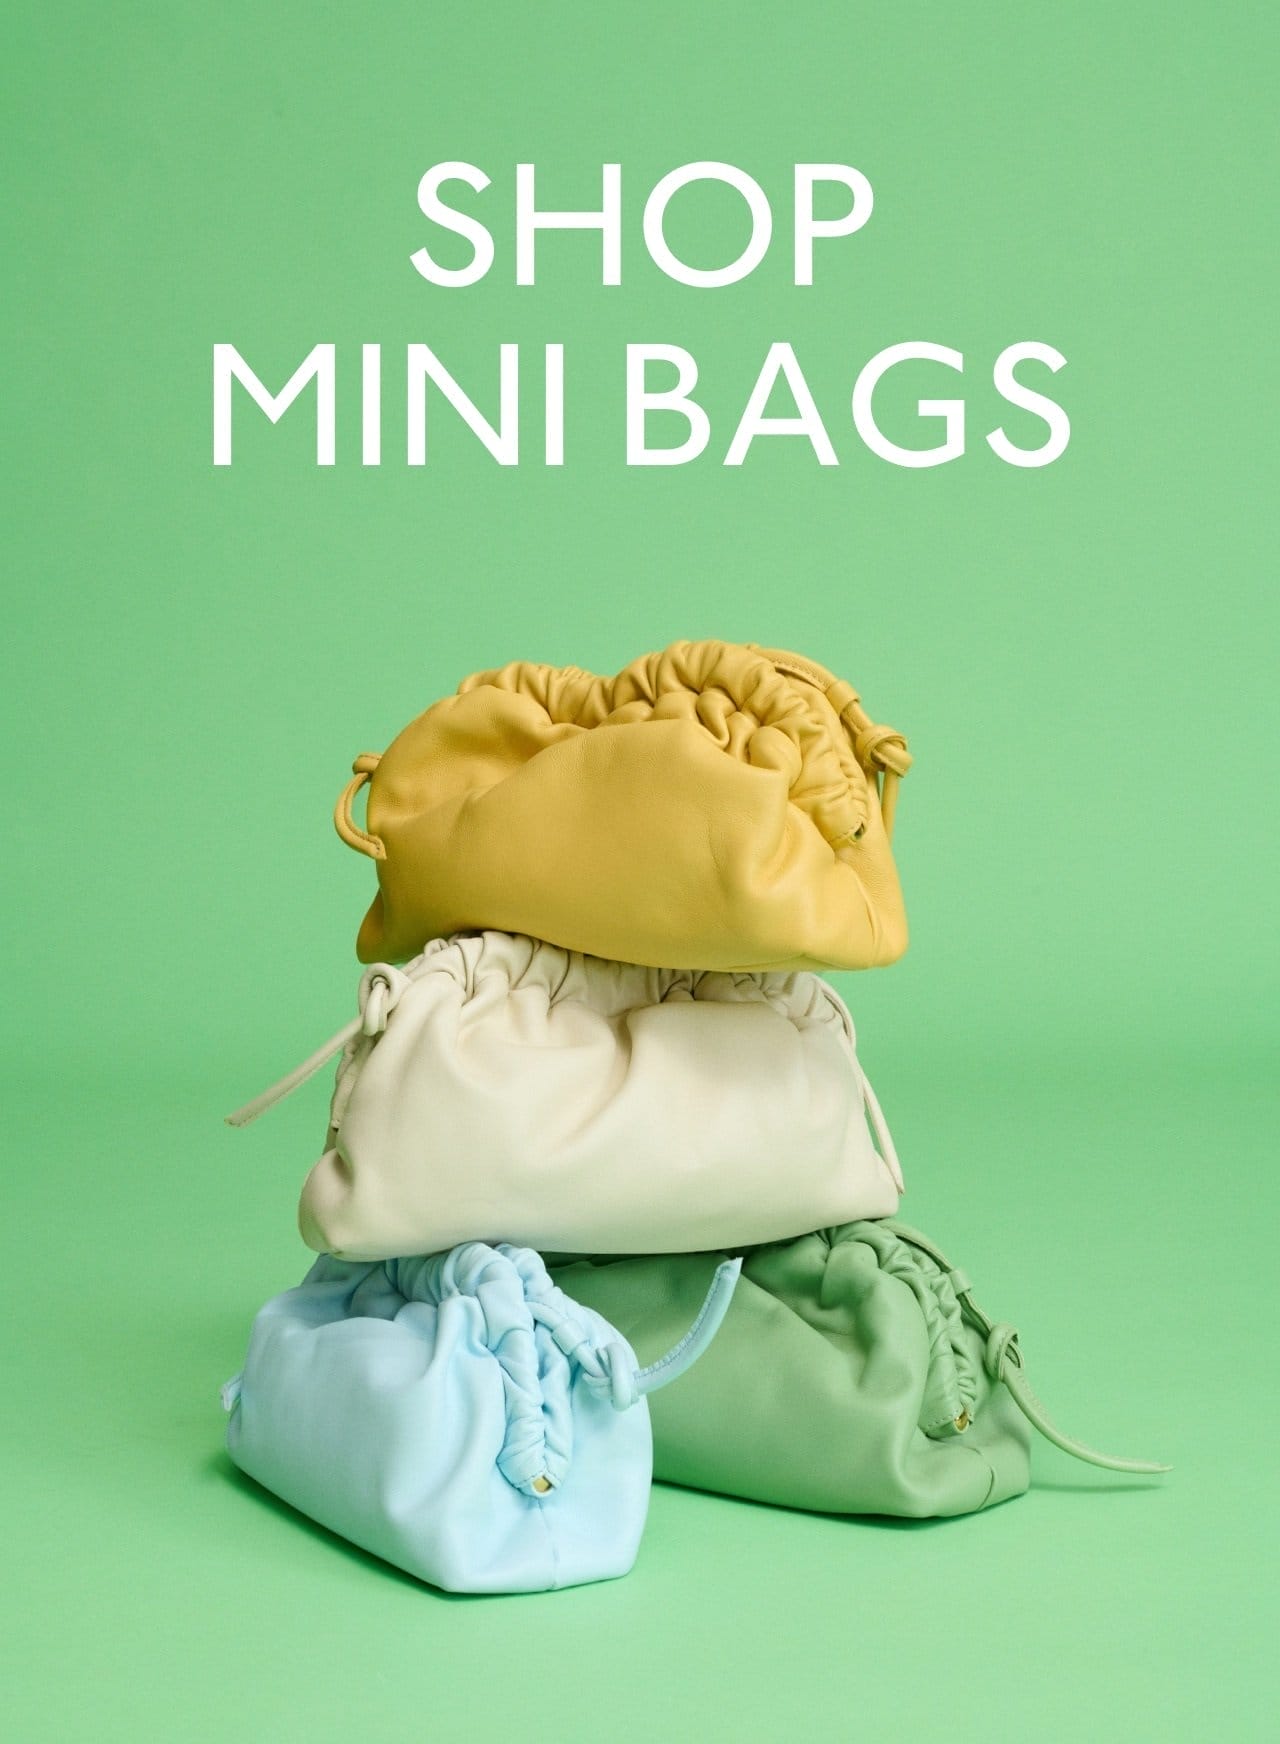 Shop mini bags.